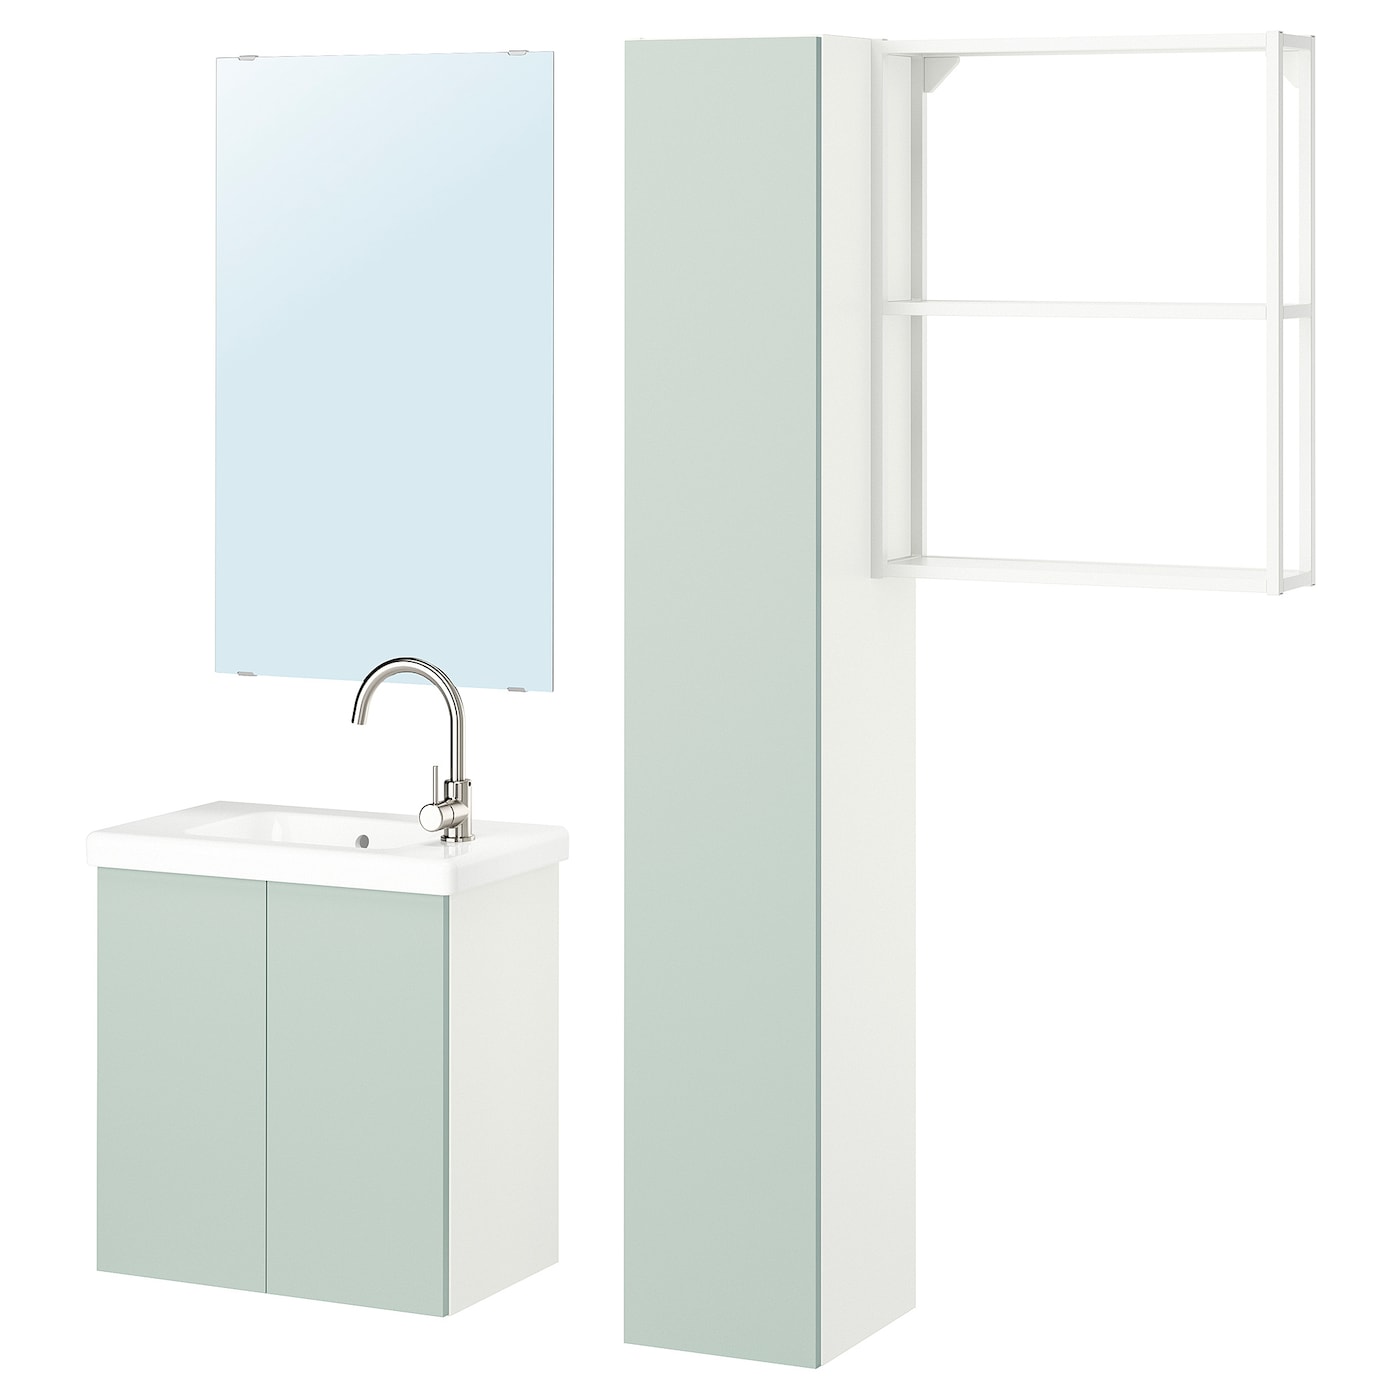 Комбинация для ванной - IKEA ENHET, 64х33х65 см, белый/серо-зеленый, ЭНХЕТ ИКЕА